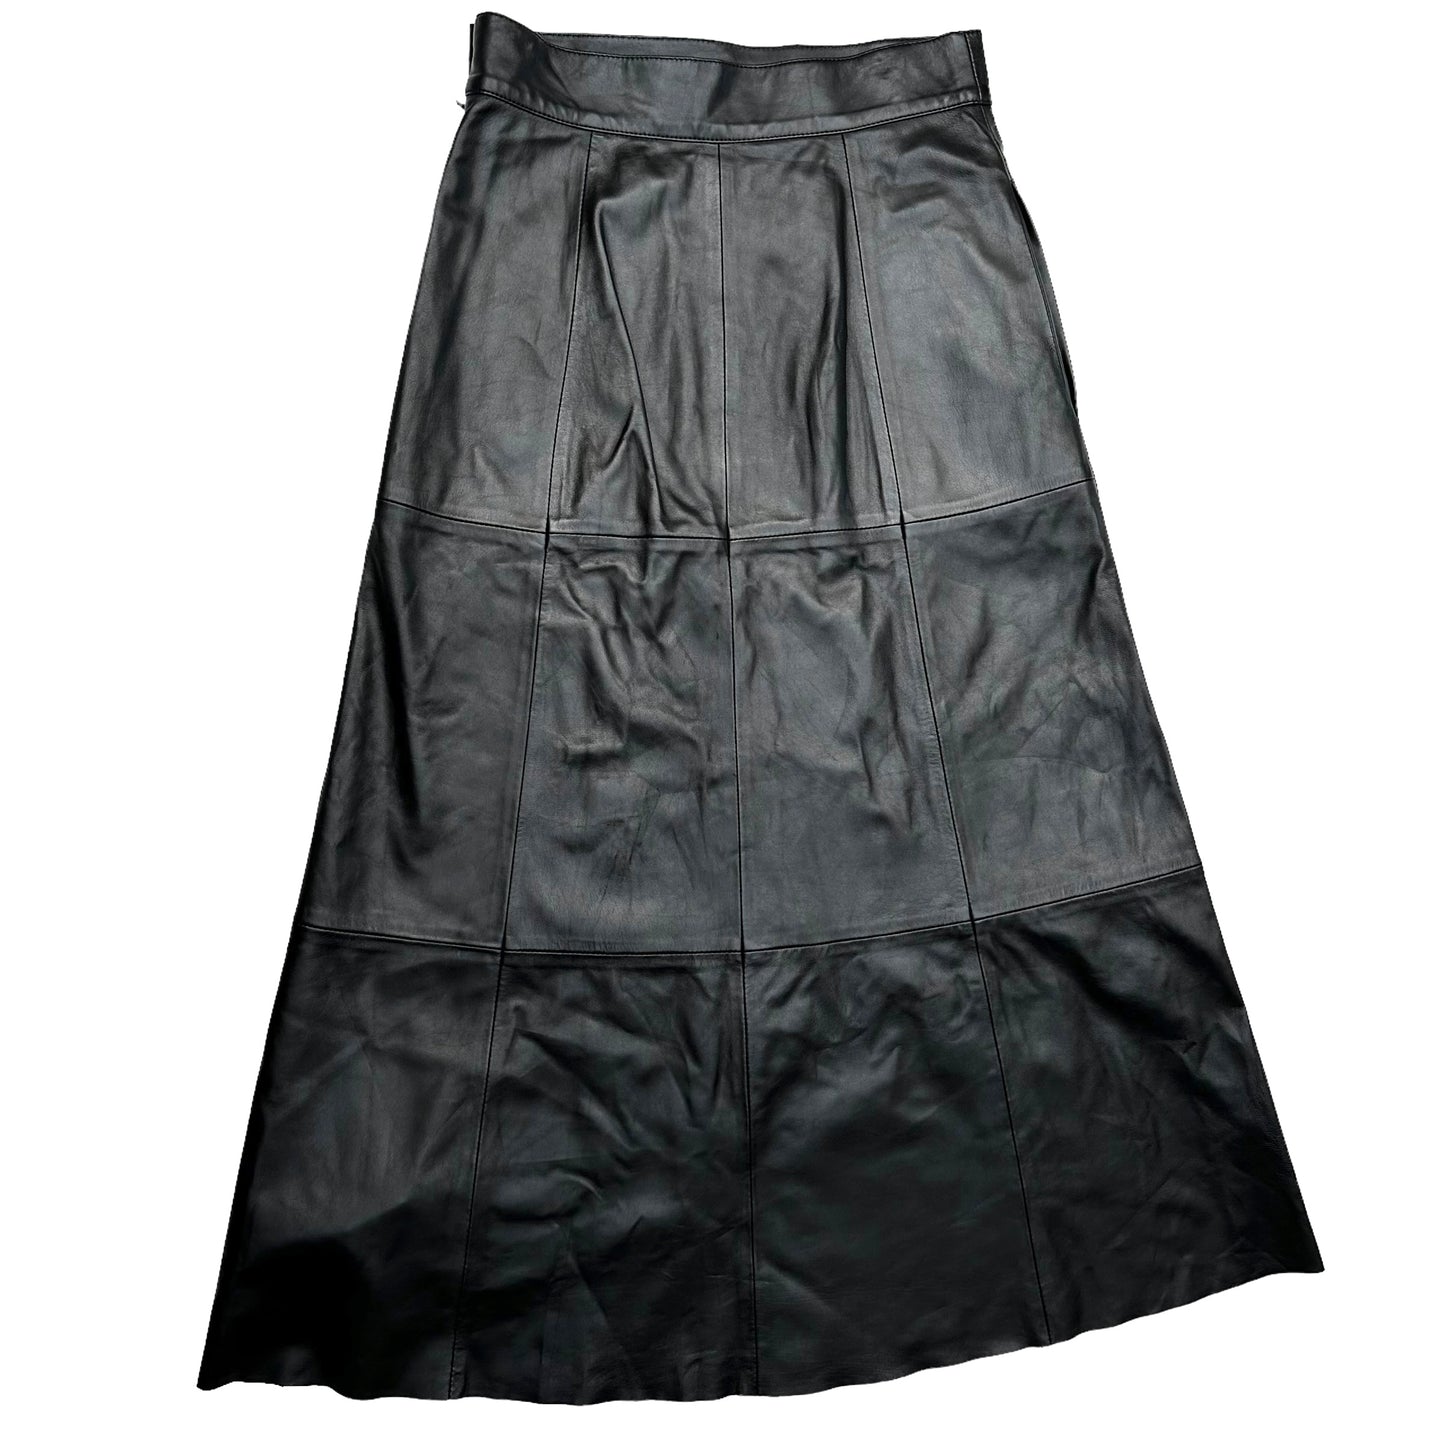 G. Label Black Leather Long Skirt - 4